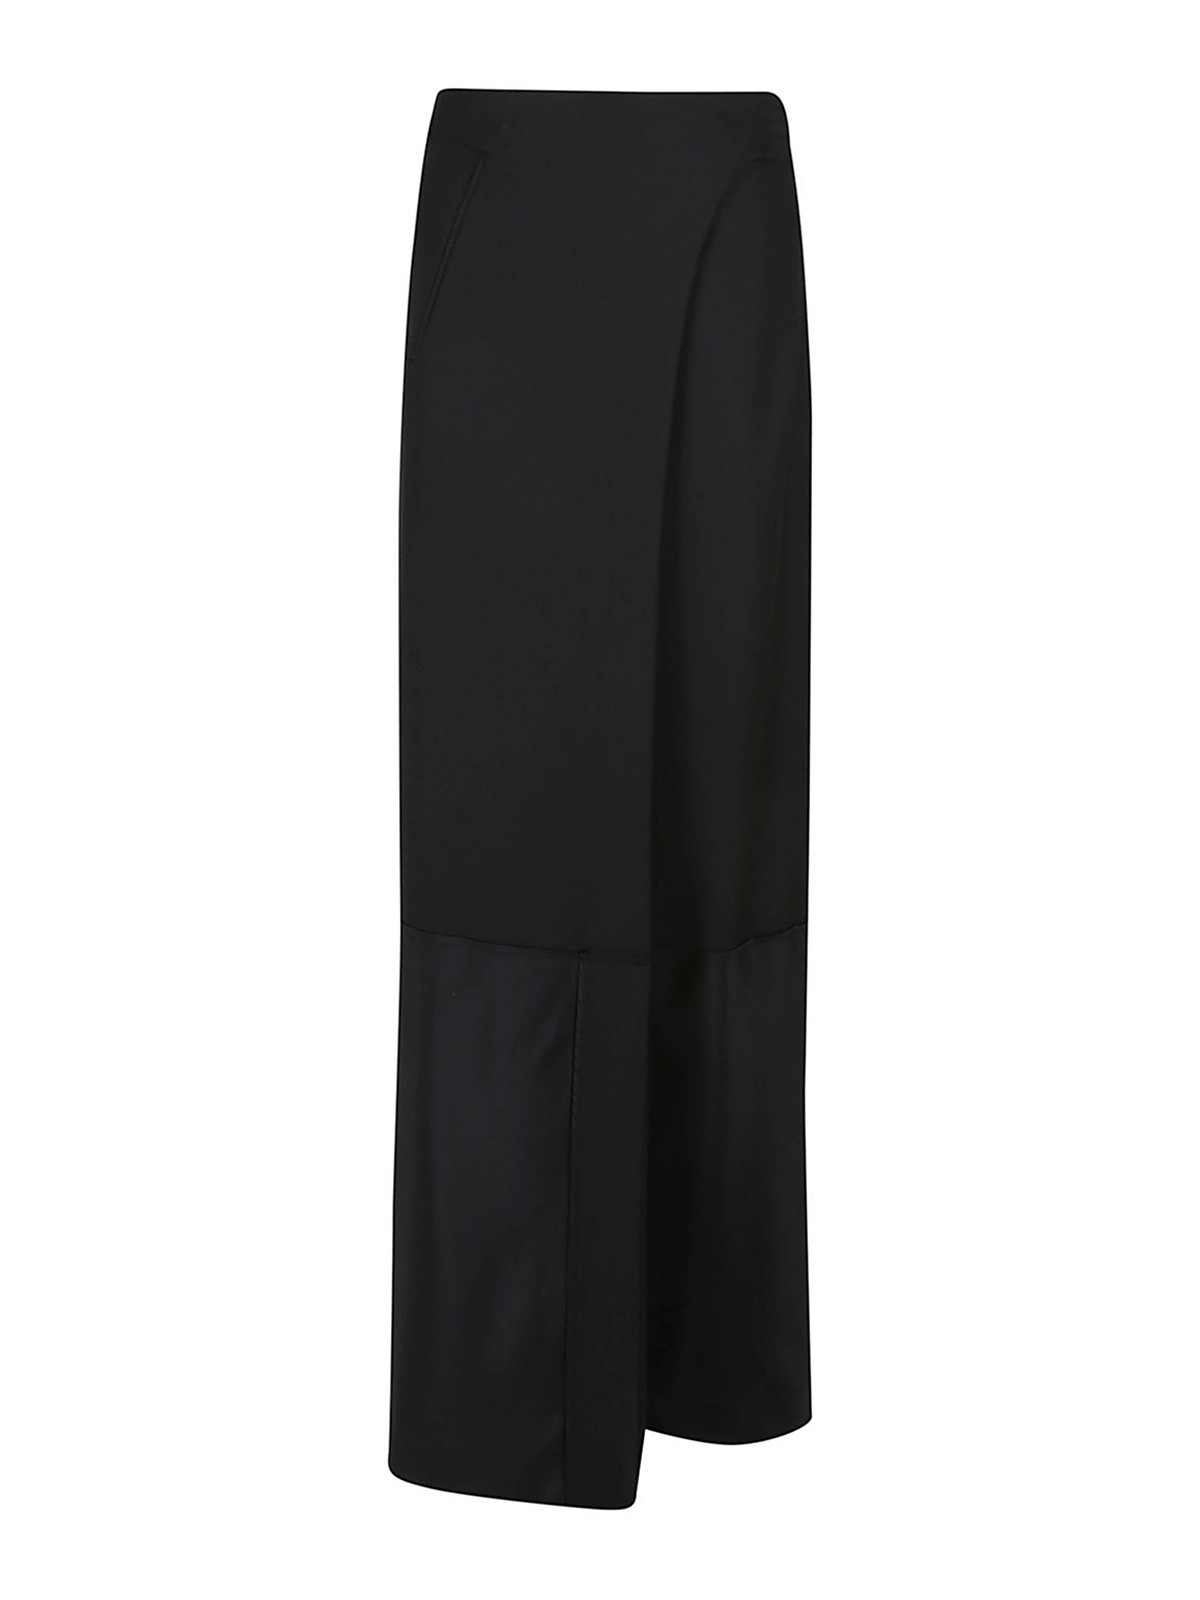 Victoria Beckham Infinity Skirt In Black